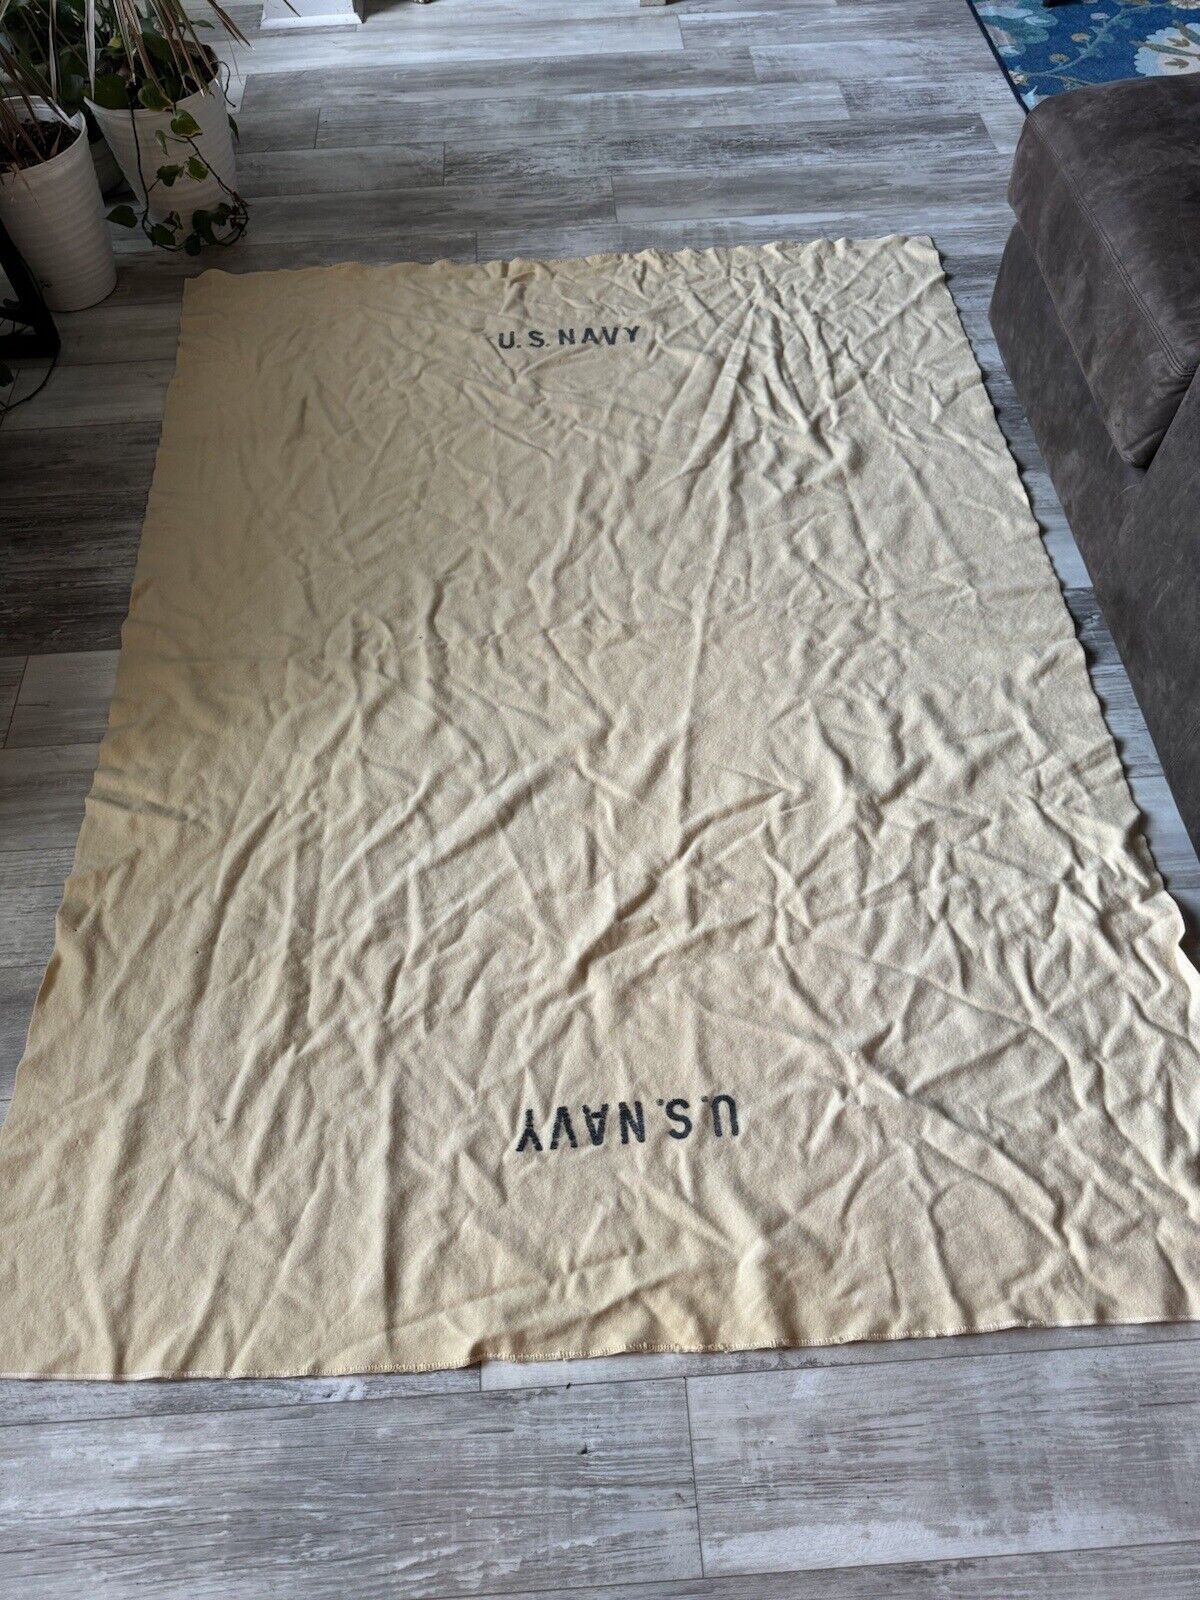 Vintage U.S. Navy Wool Blanket 80”x60” Good Condition, WW II